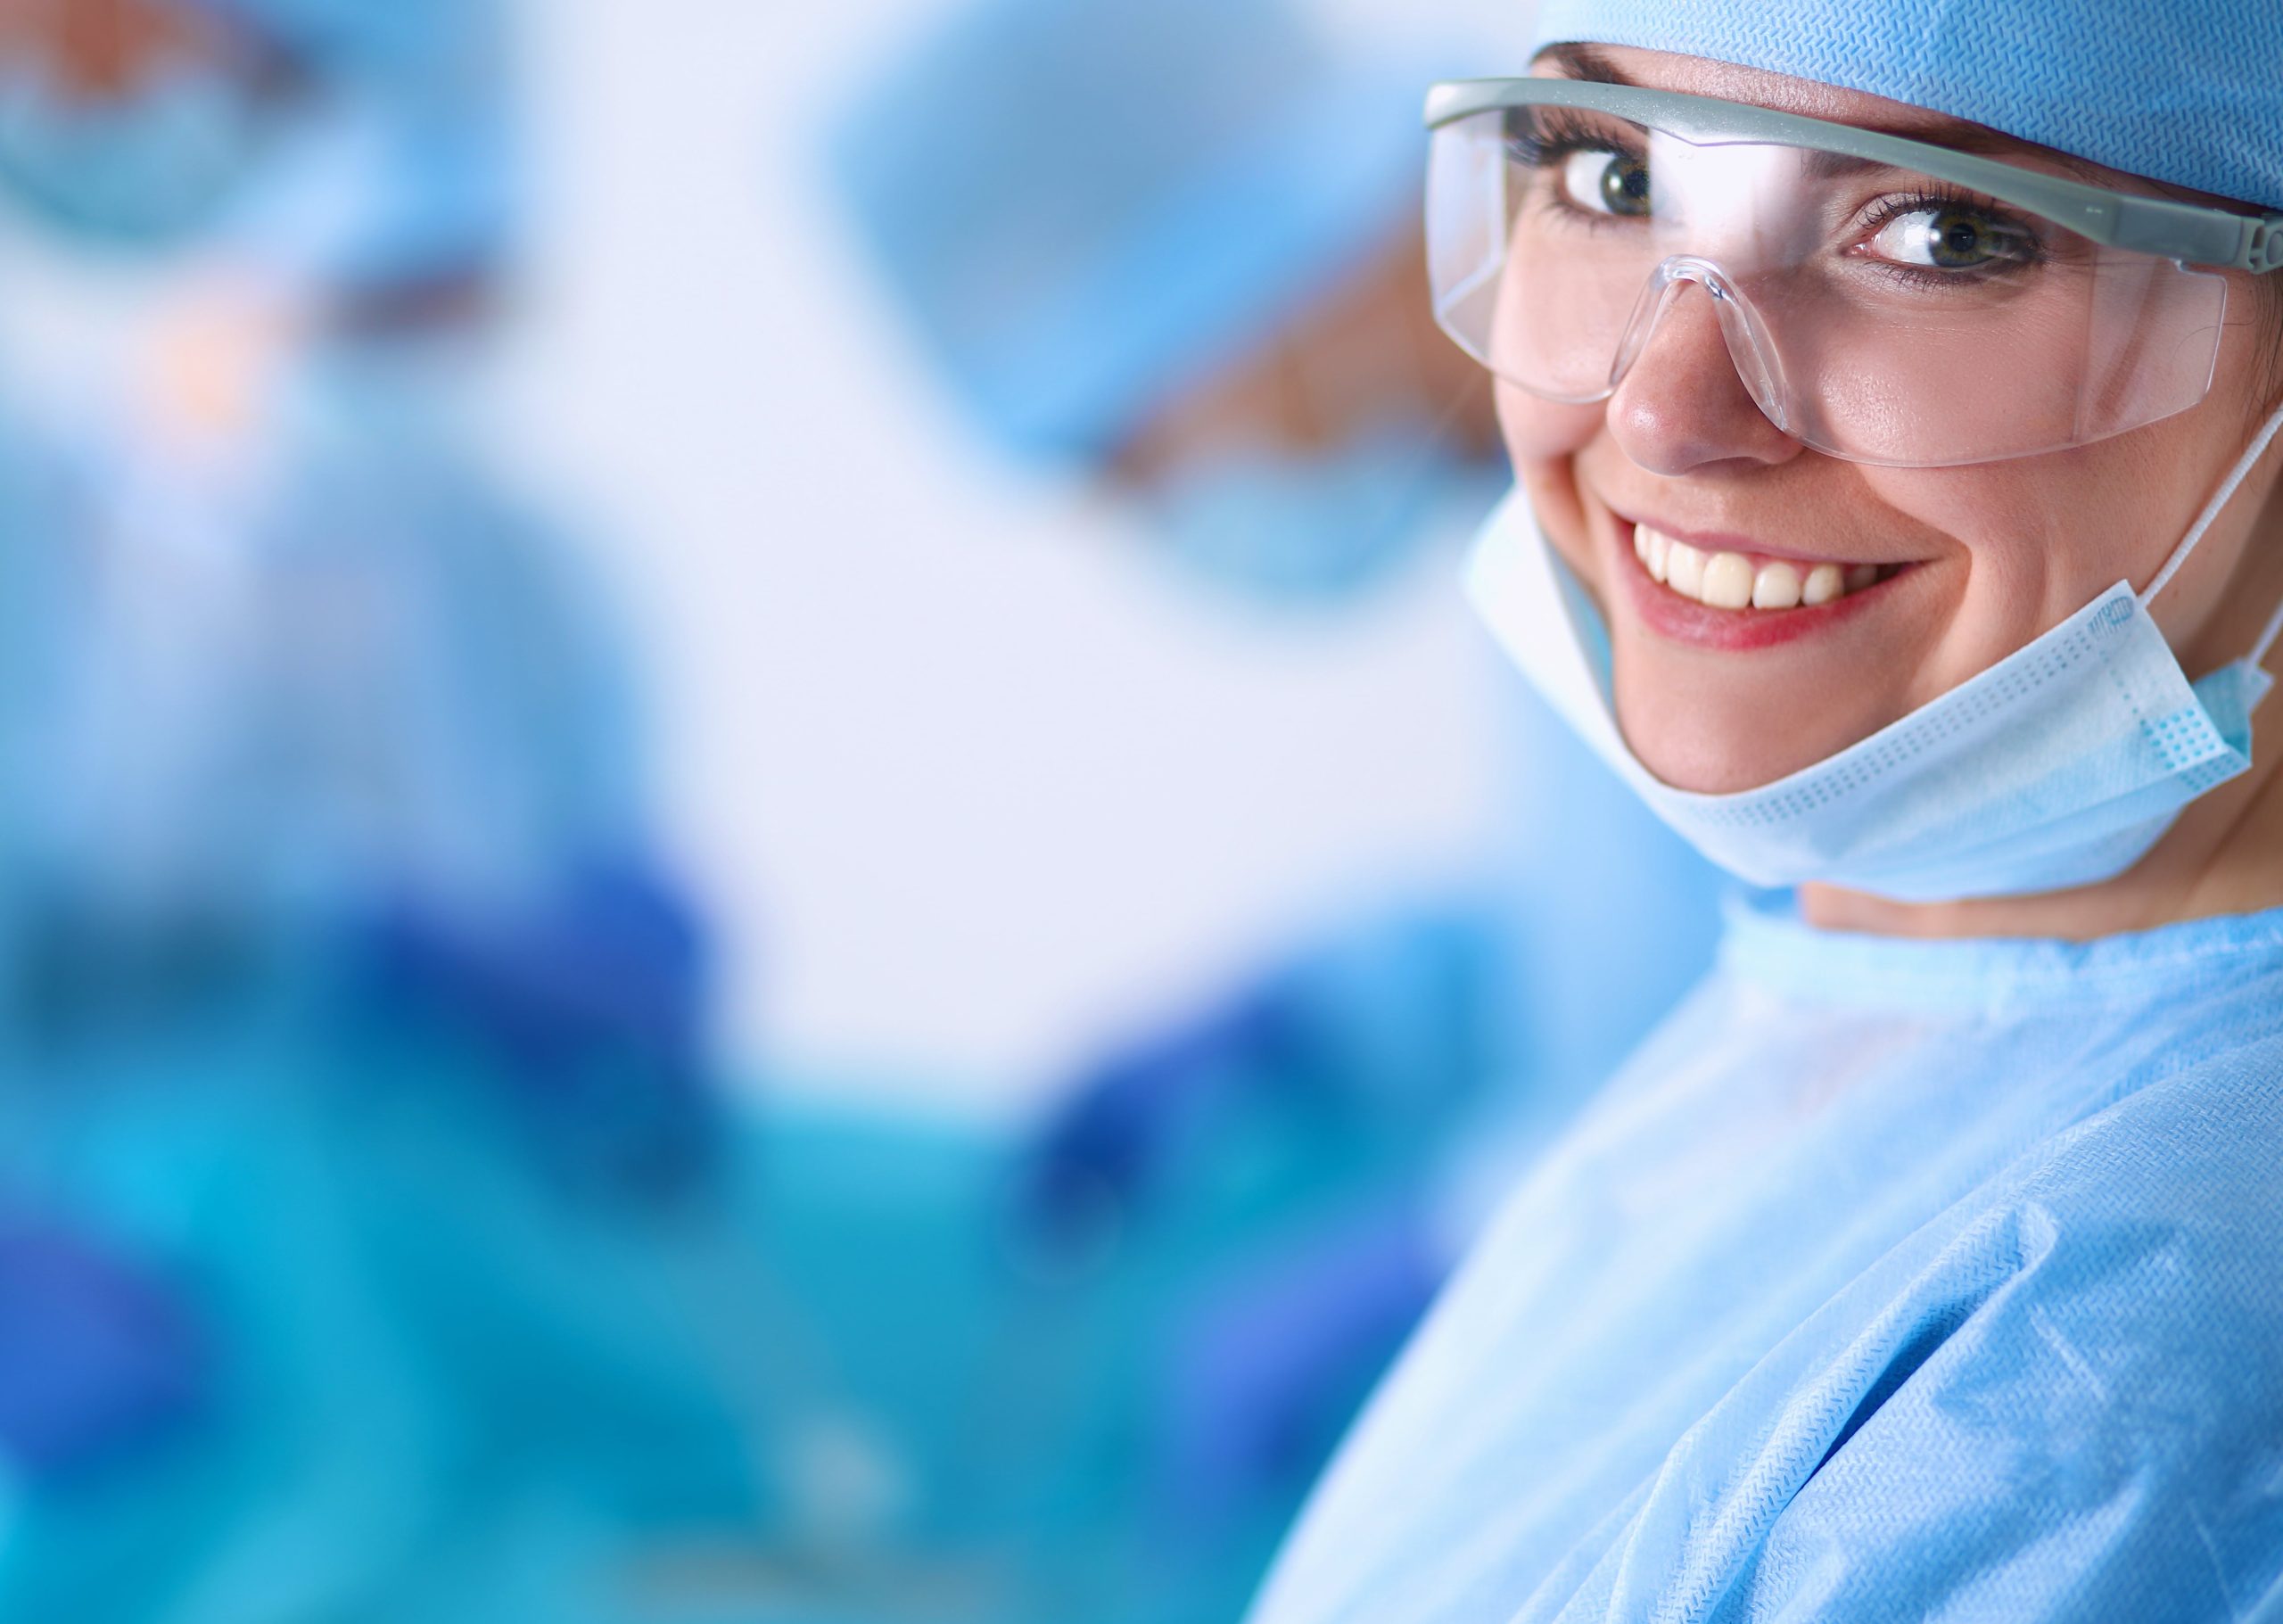 A nurse smiling in her scrubs.